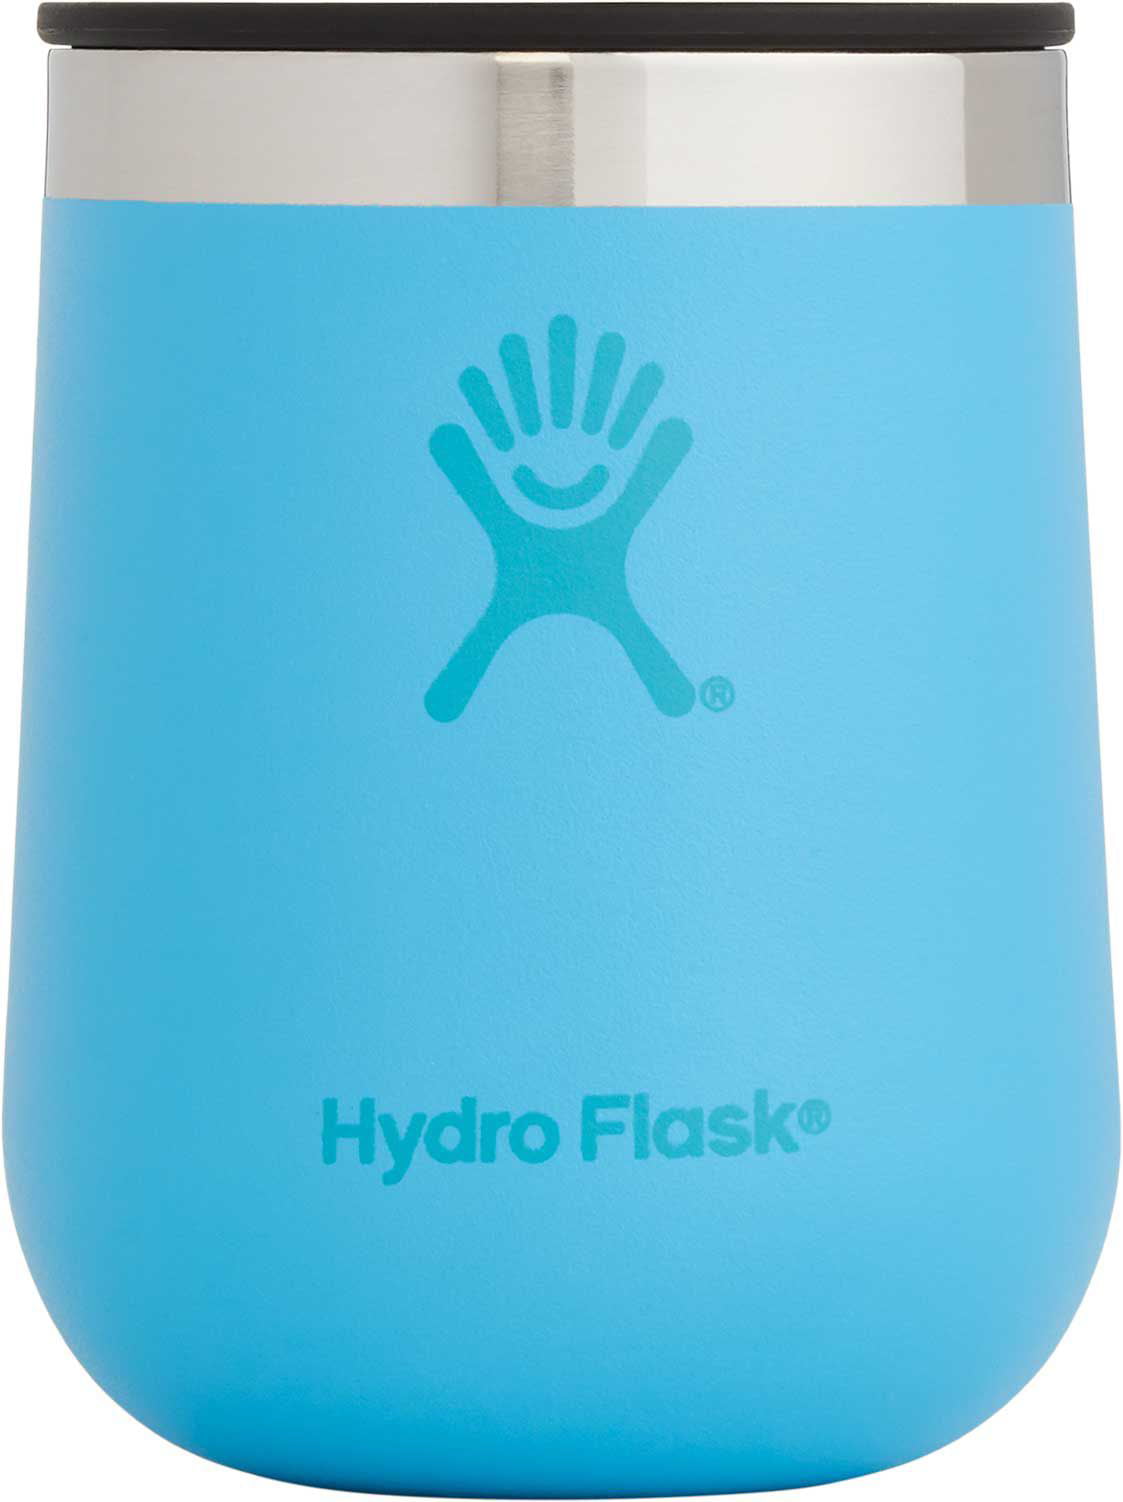 skyline series hydro flask